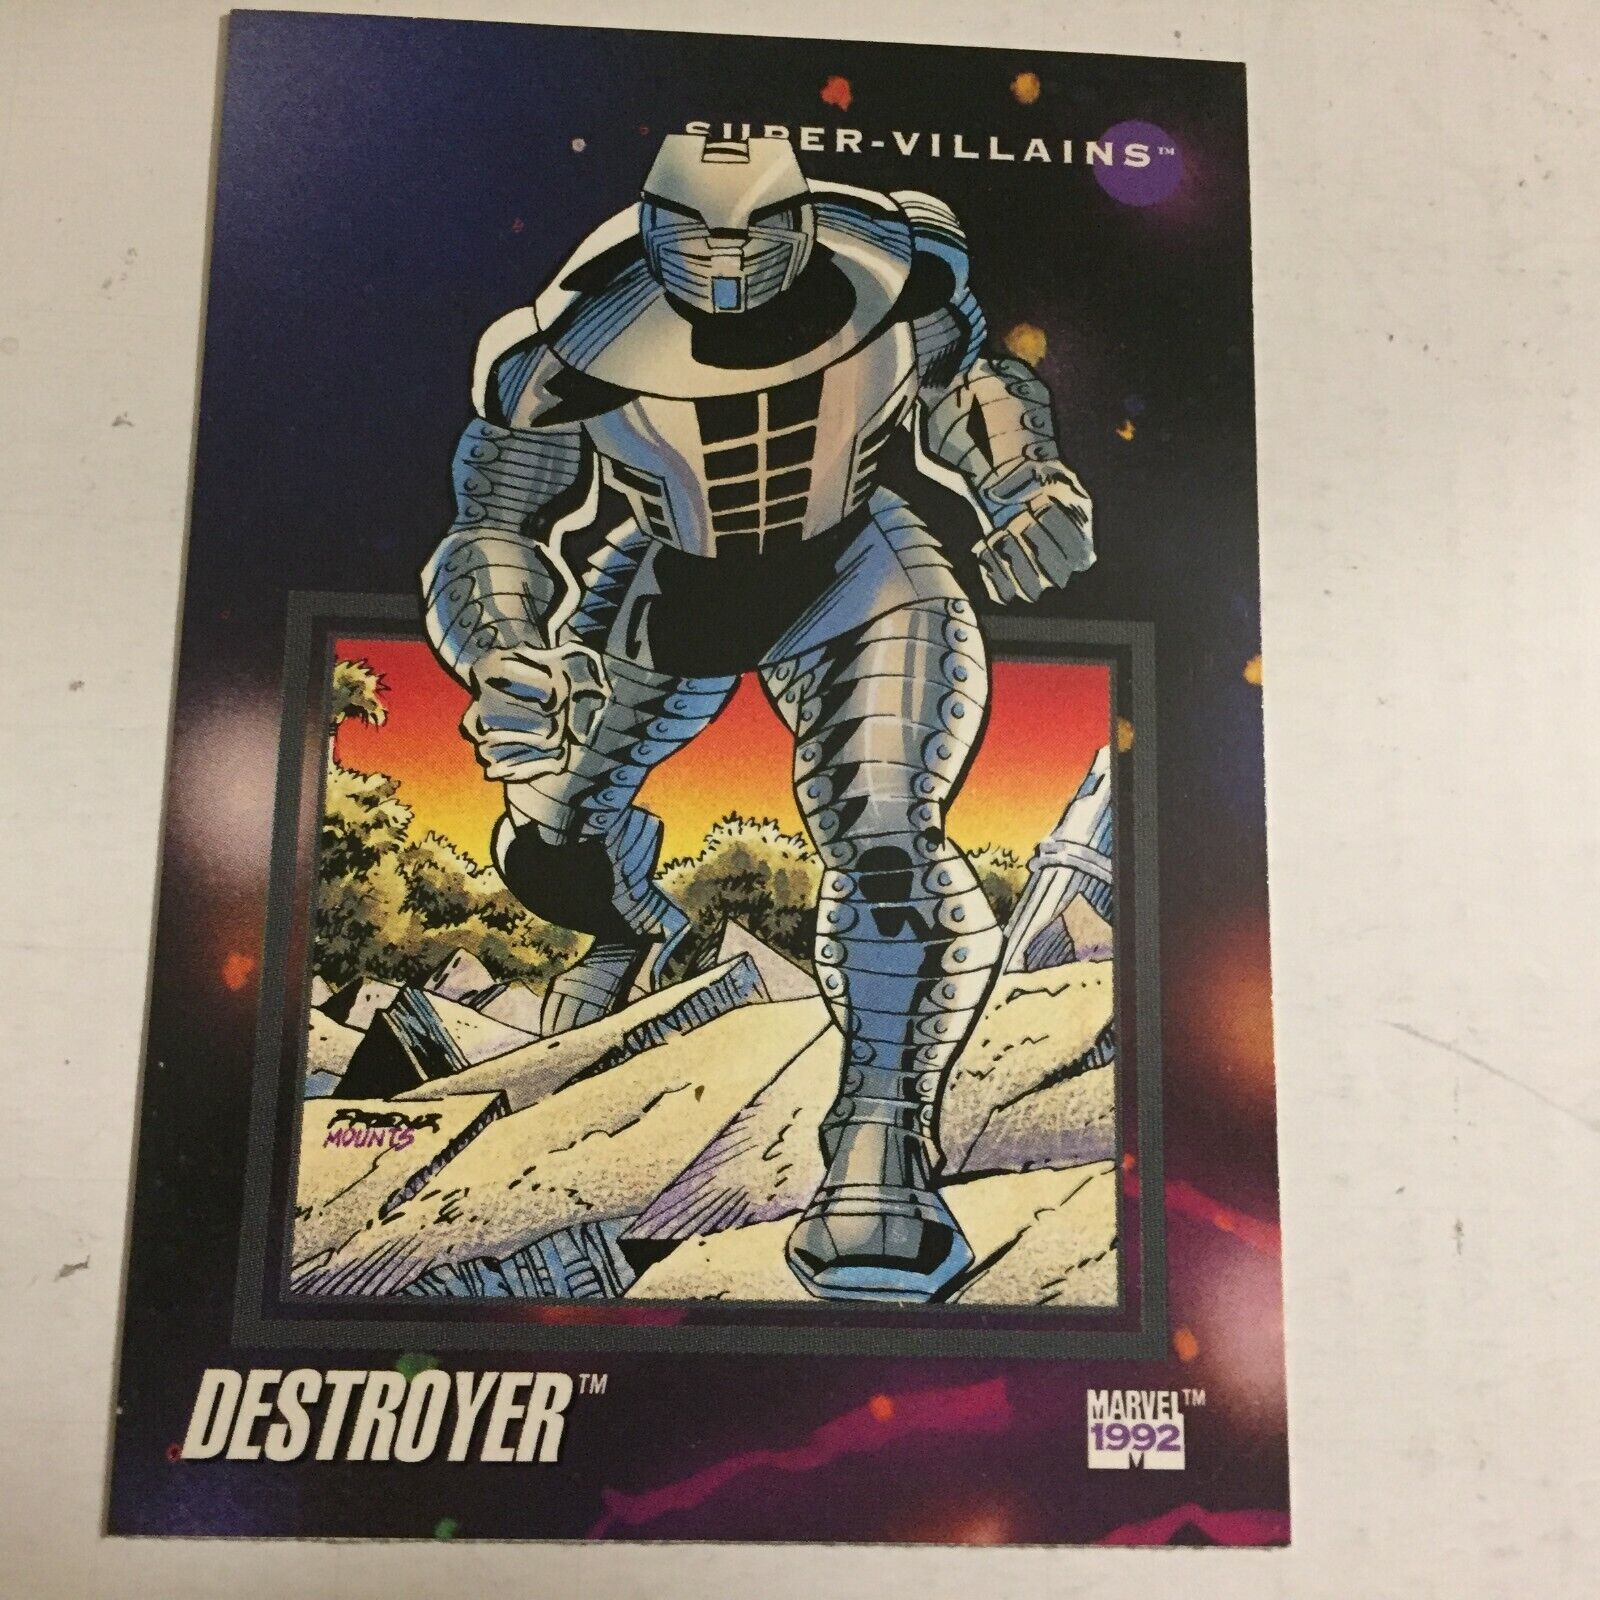 1992 Marvel Destroyer Super-Villians Comics Trading Card - $2.80